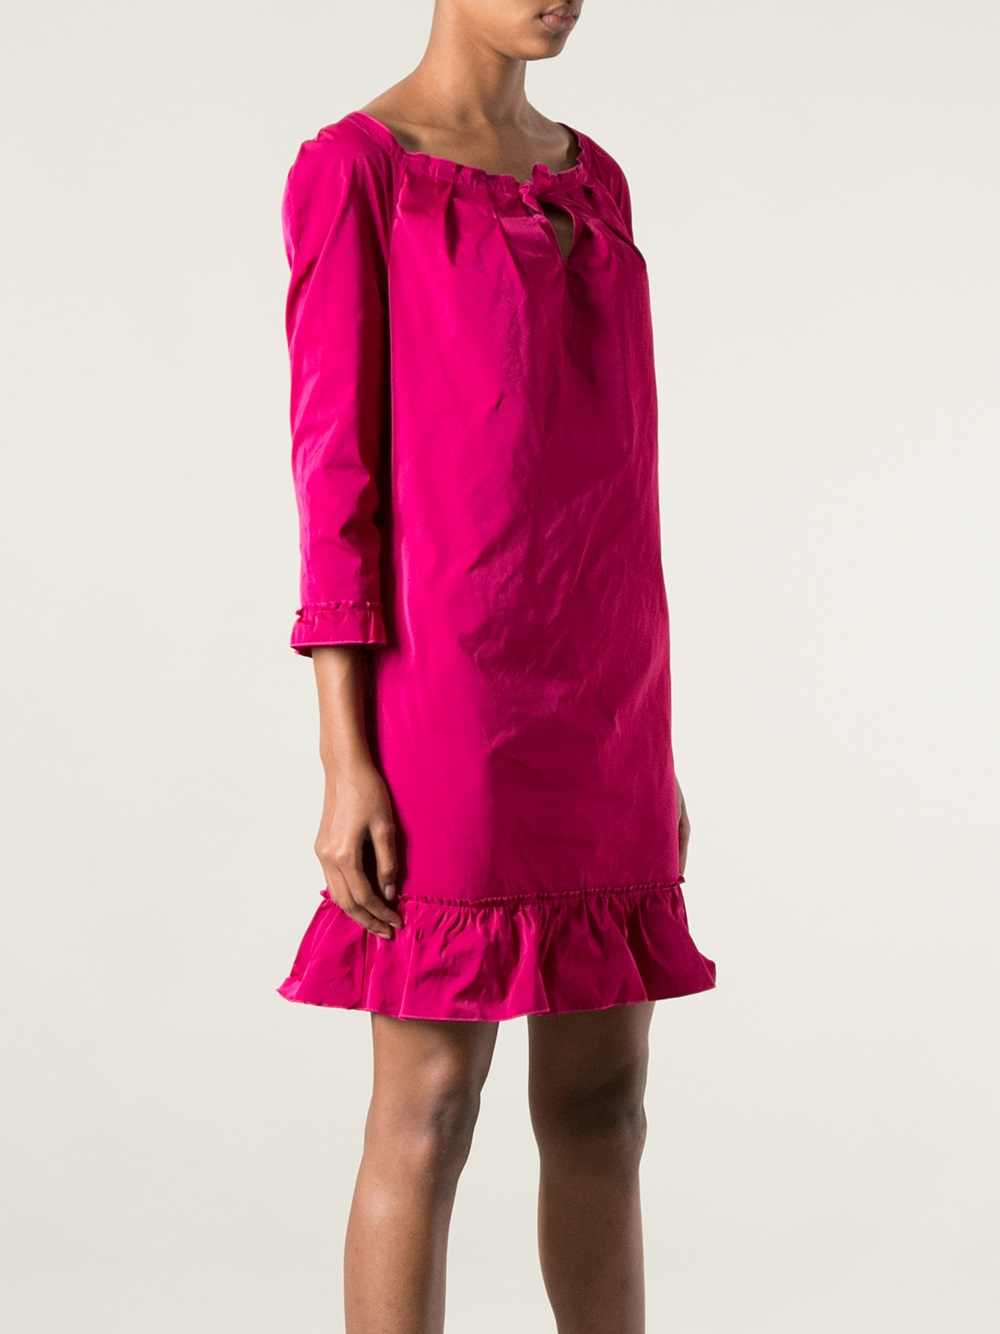 Lyst - Nina Ricci Pleated Neckline Shift Dress in Purple